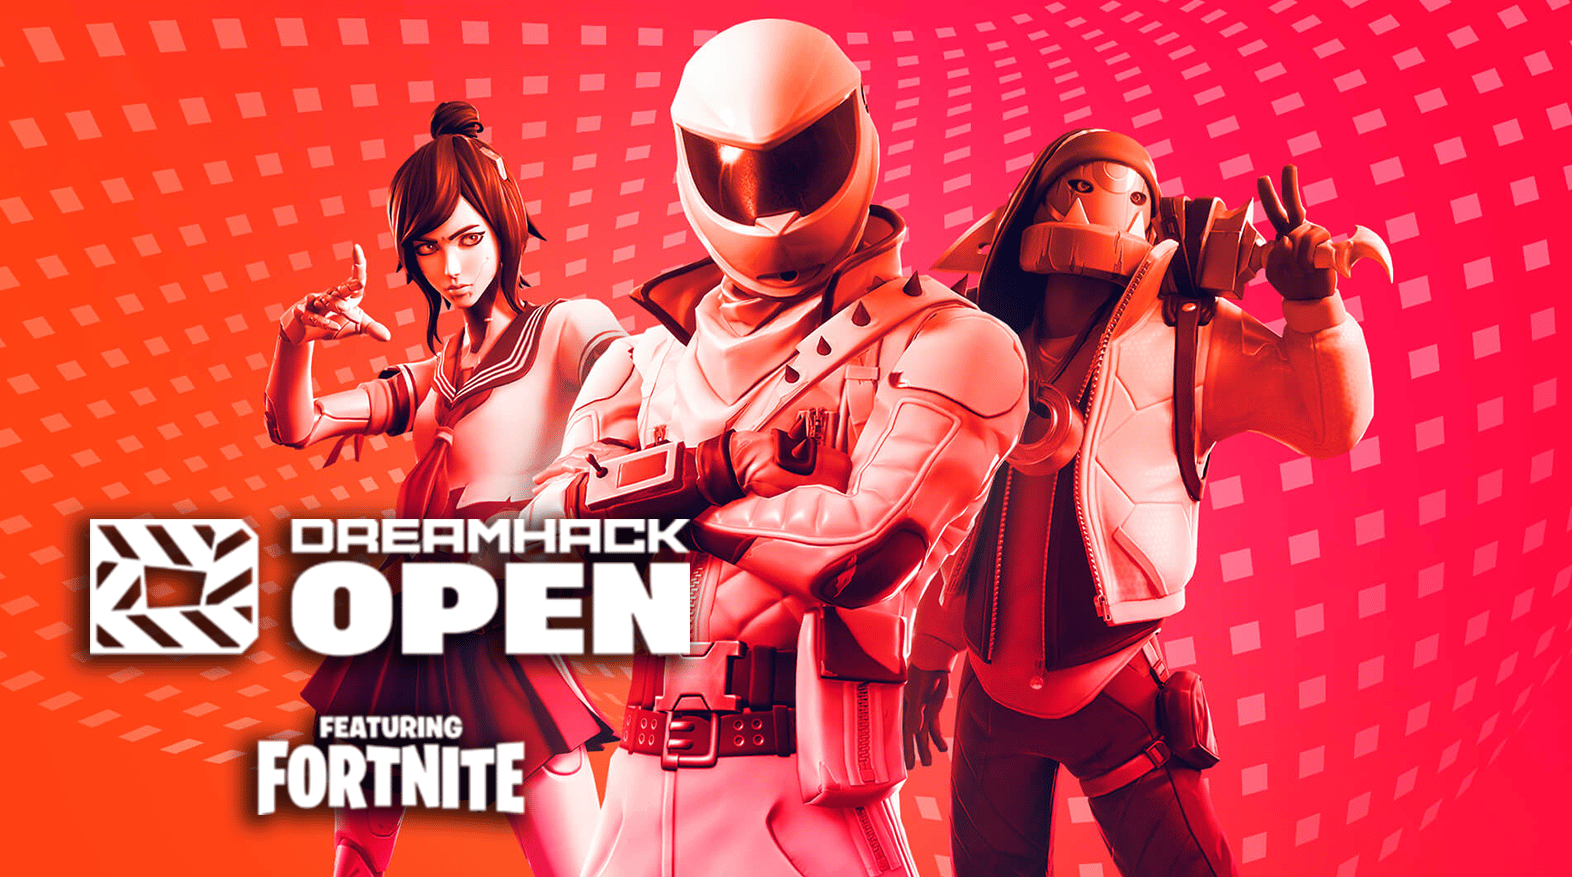 Fortnite DreamHack Open promotional graphic